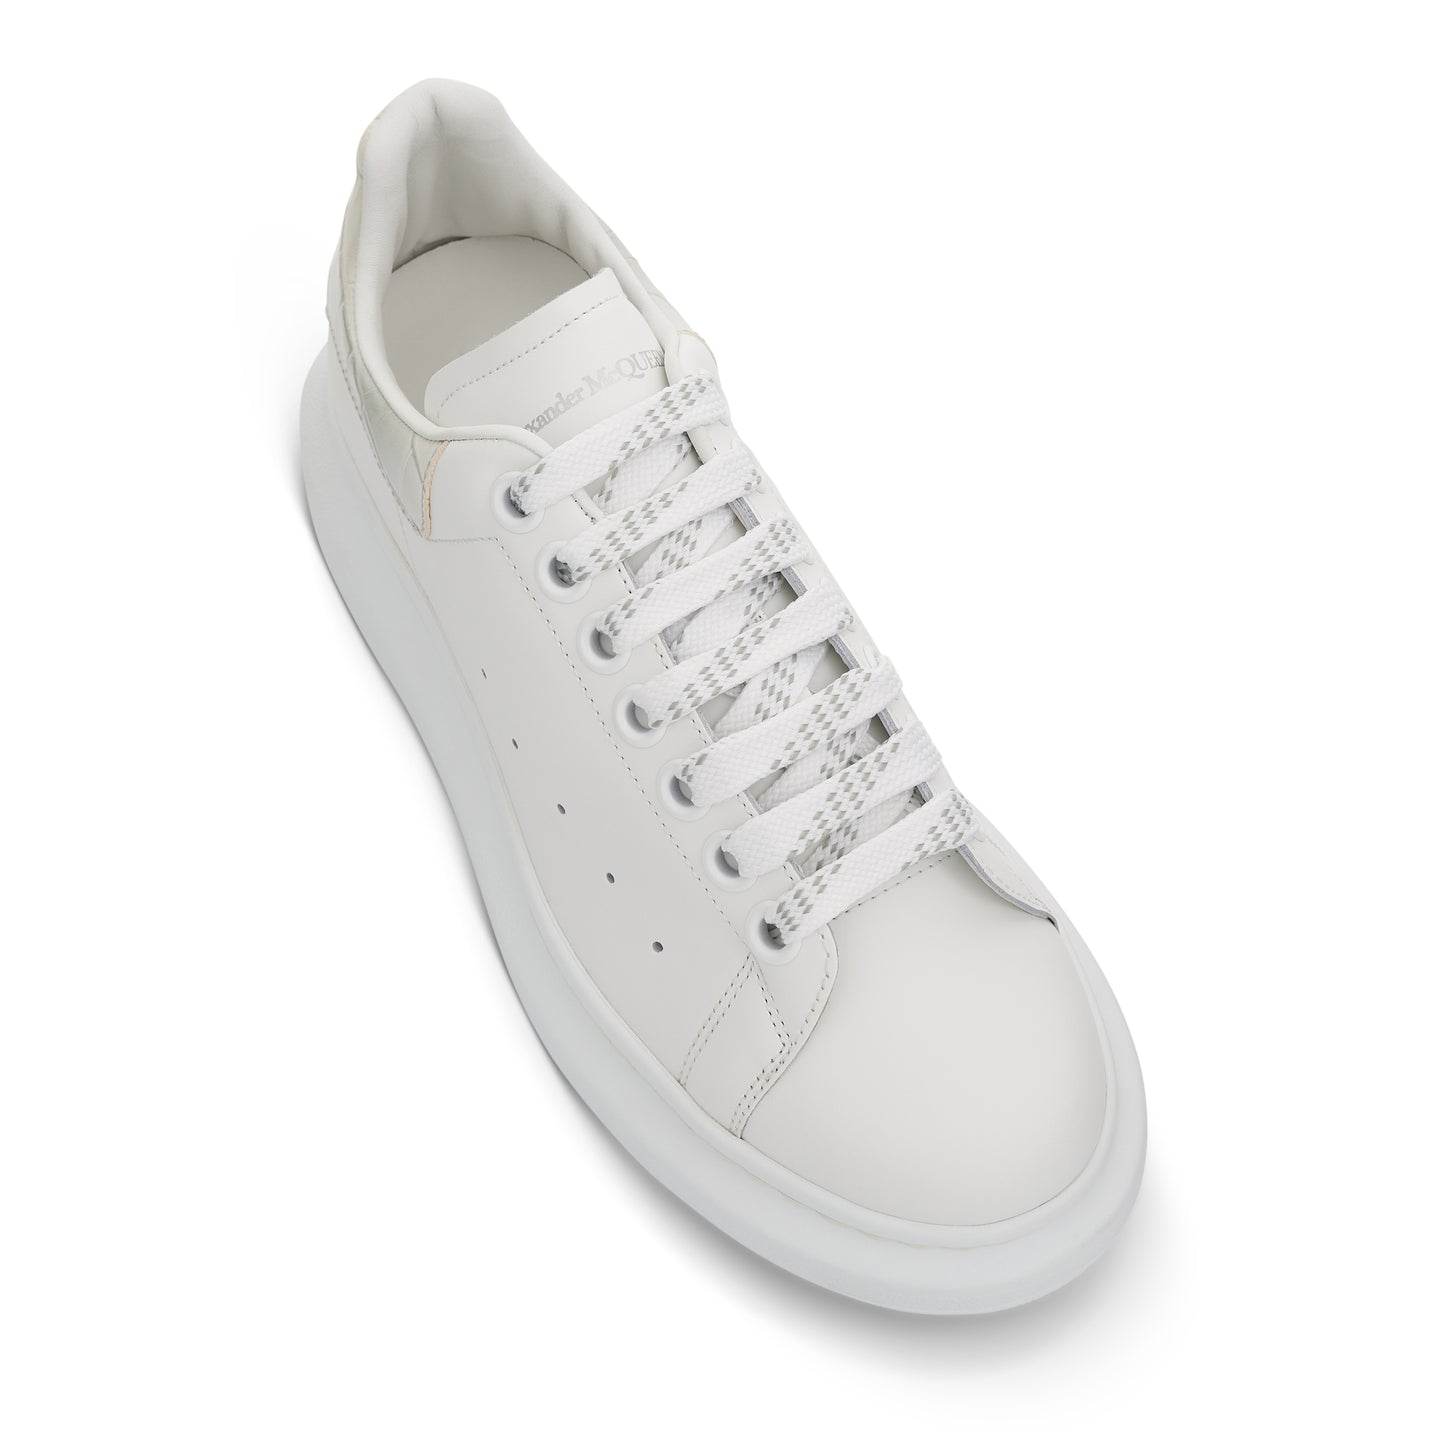 Larry Oversized Sneaker in White/Hawthorn